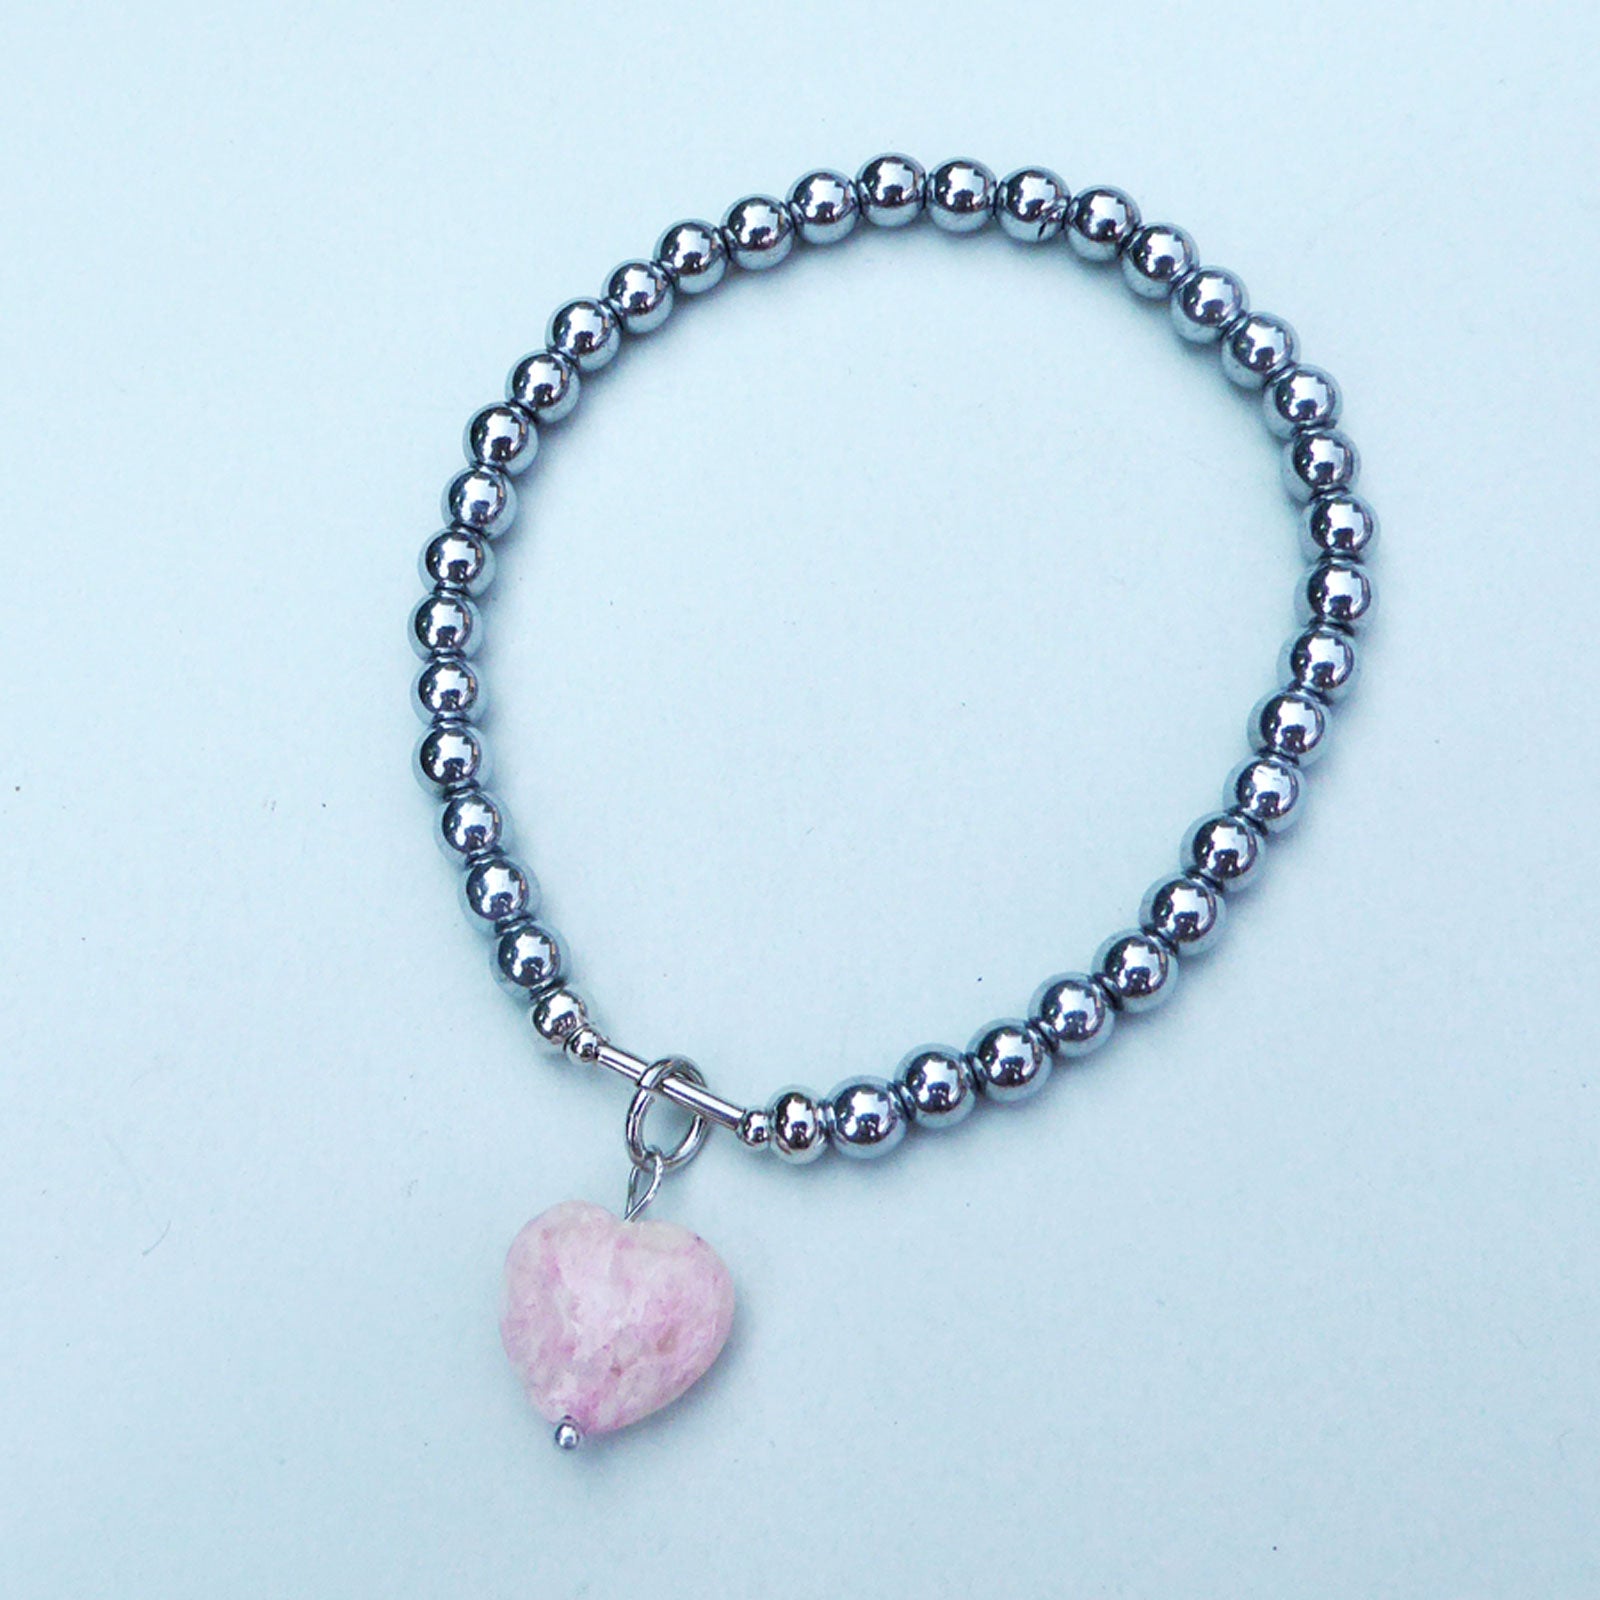 Pale pink fossil heart charm bracelet